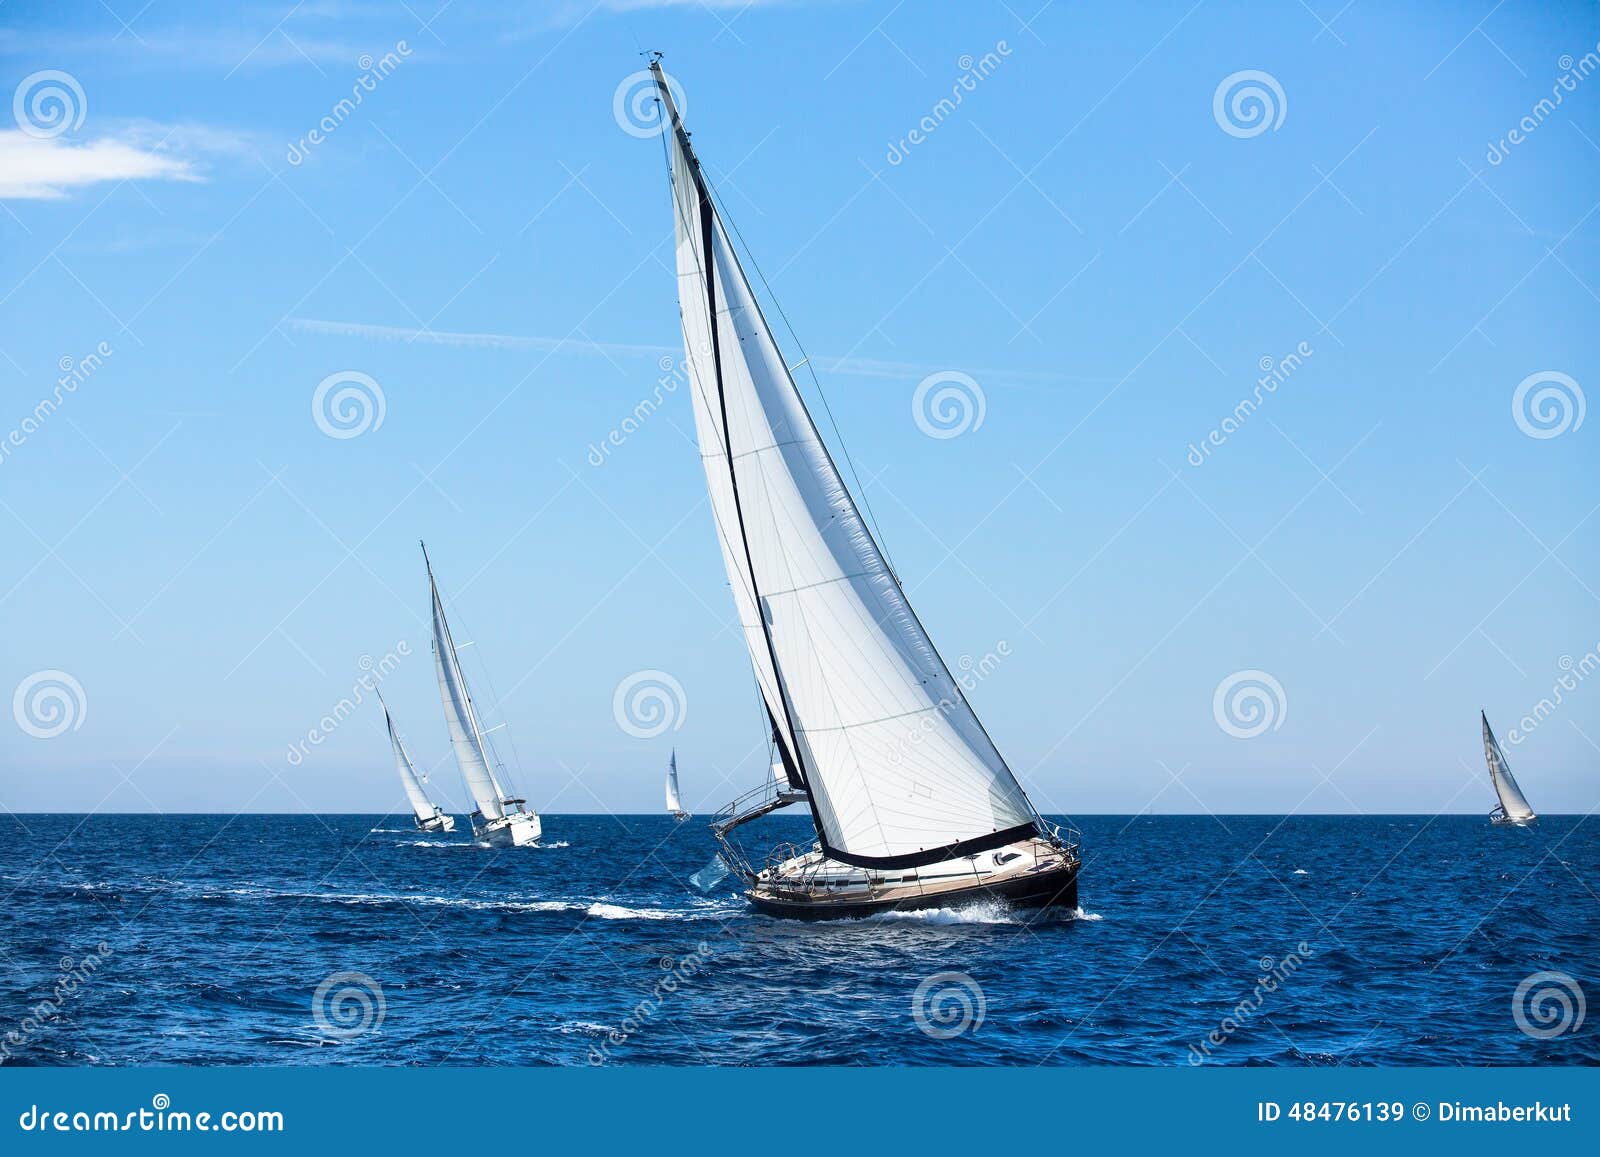 group of sail yachts in regatta in open the sea. boat in sailing regatta.